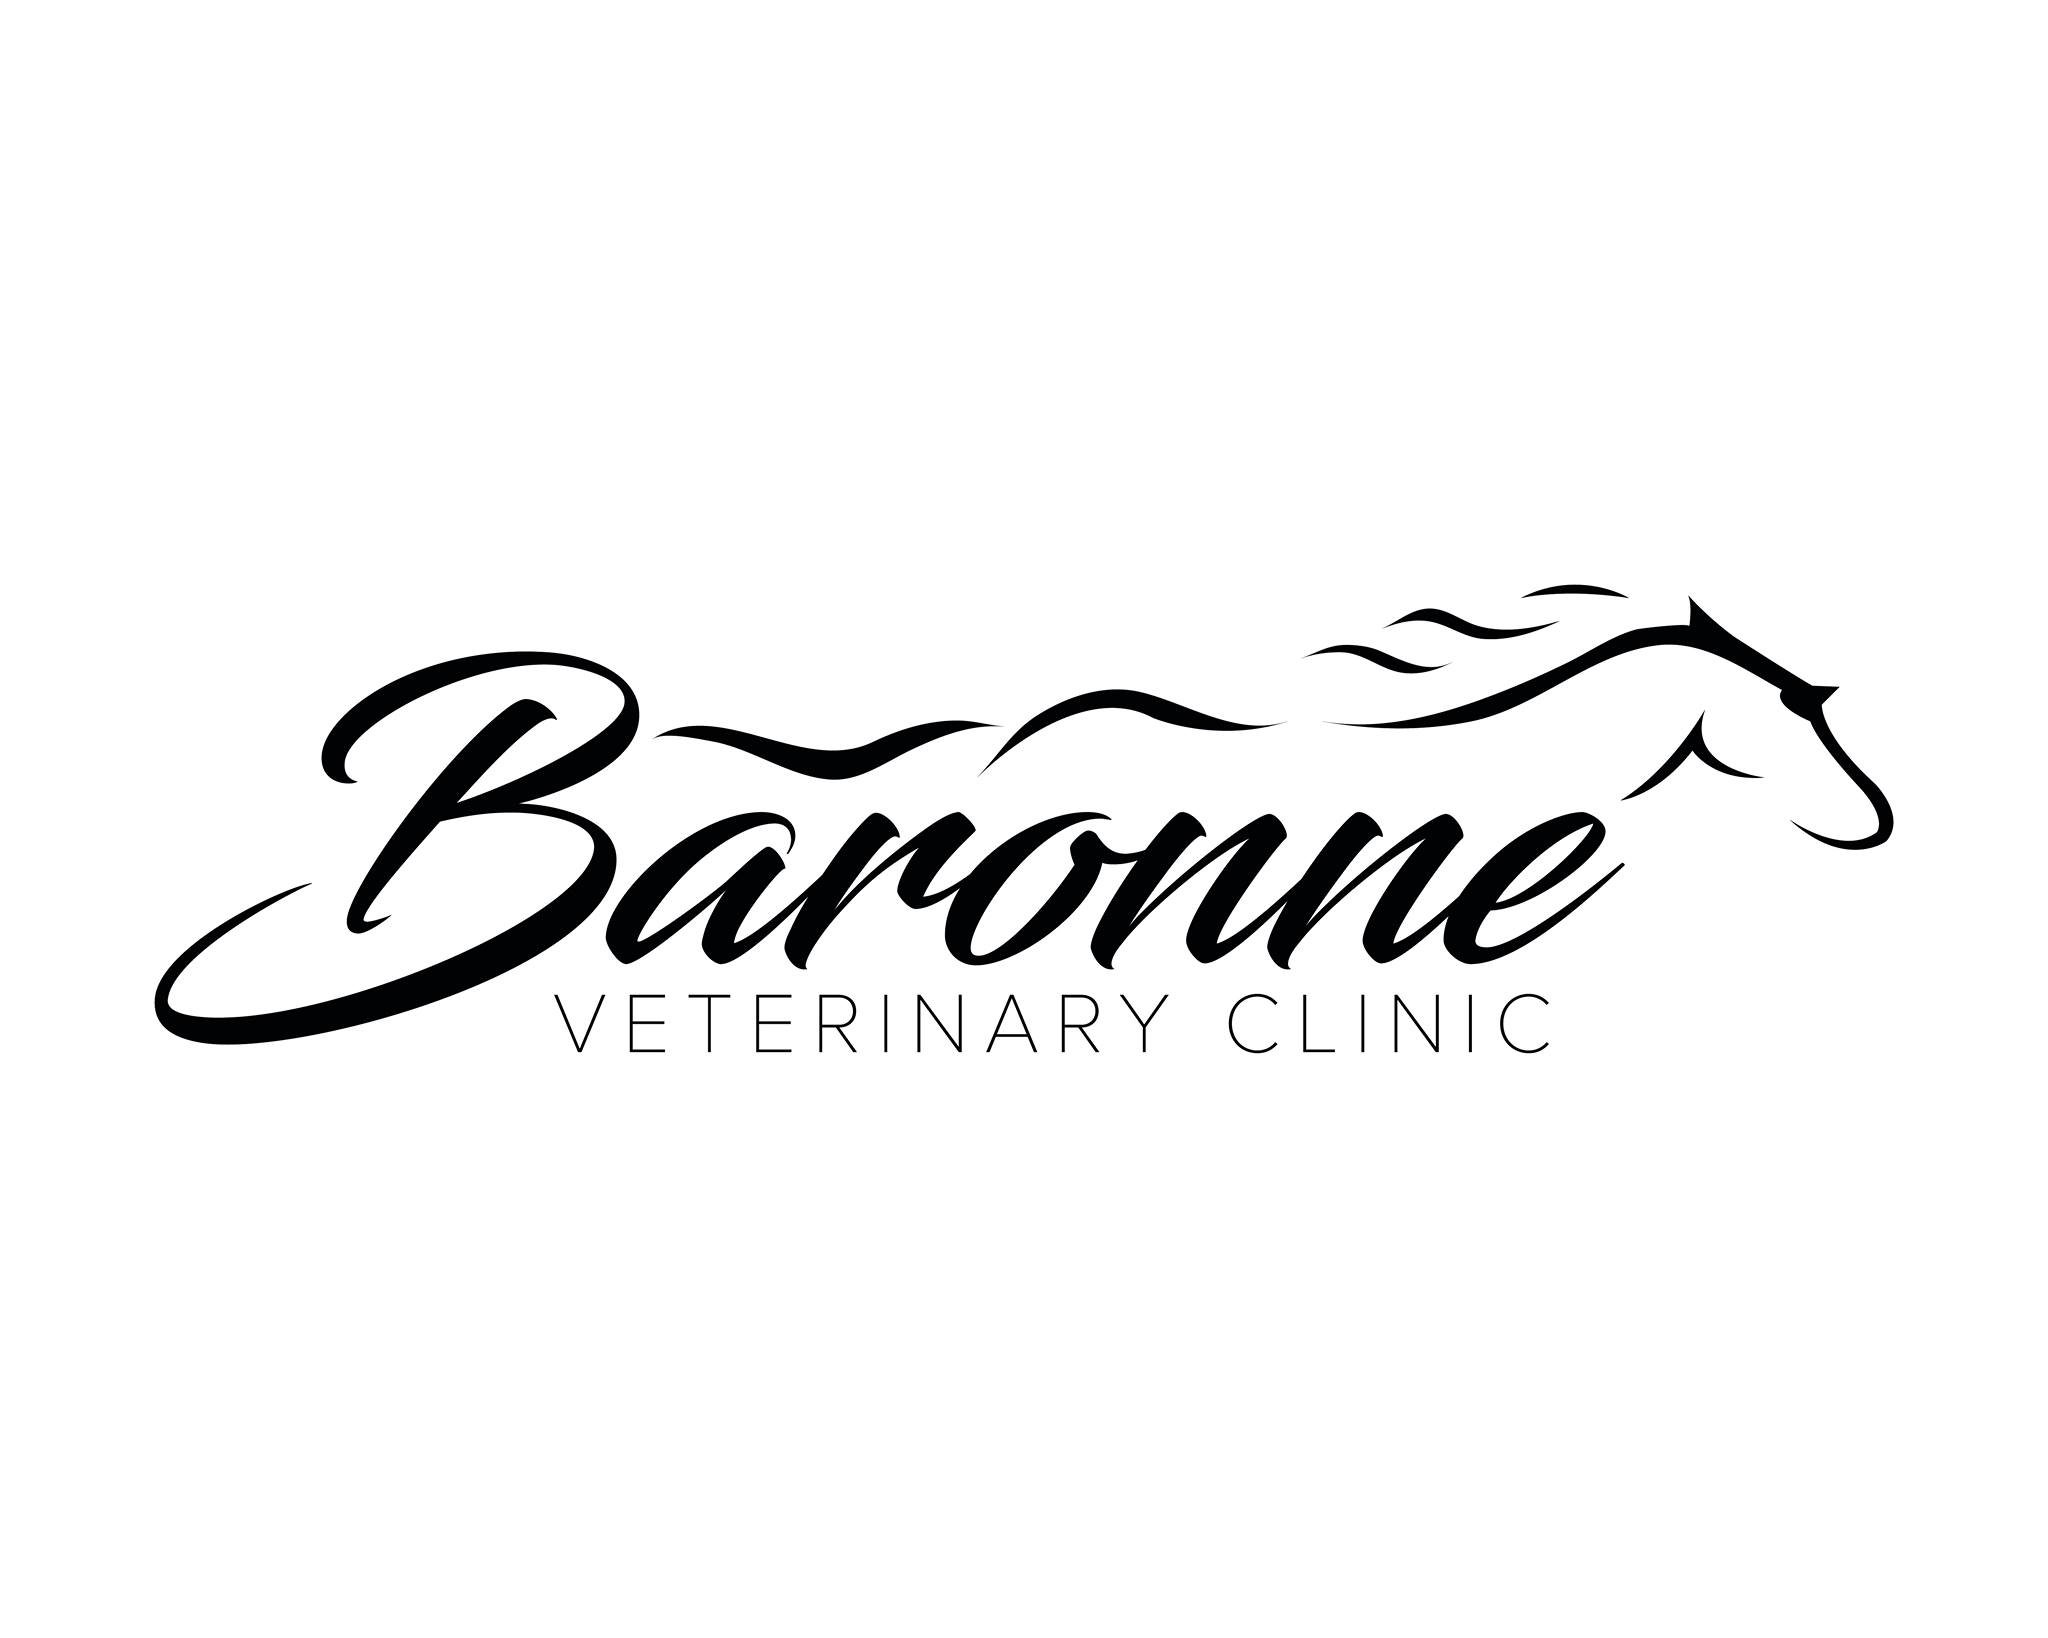 Baronne Veterinary Clinic: Champion Emily DVM